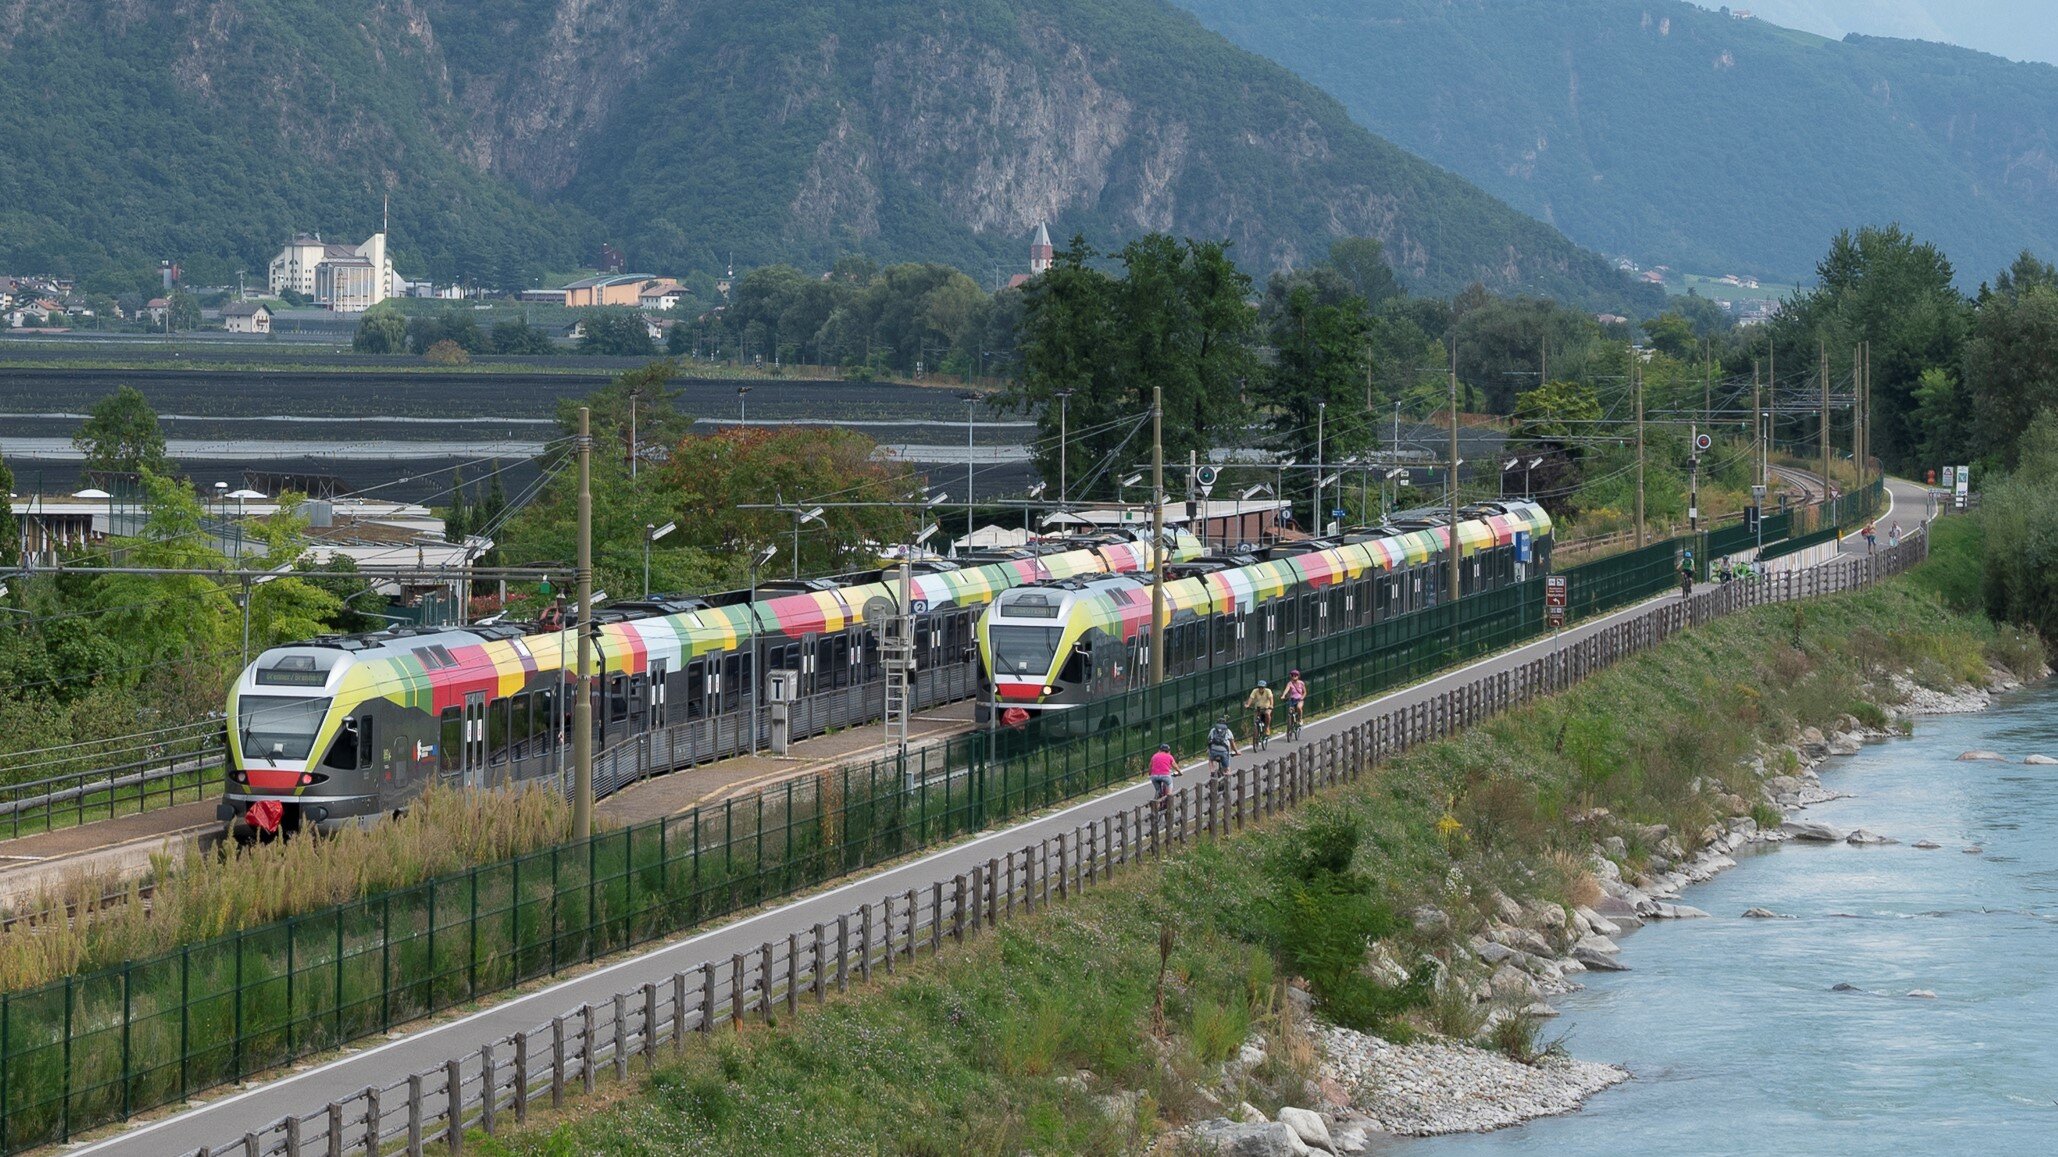 Two trains between Merano/Meran and Bolzano/Bozen